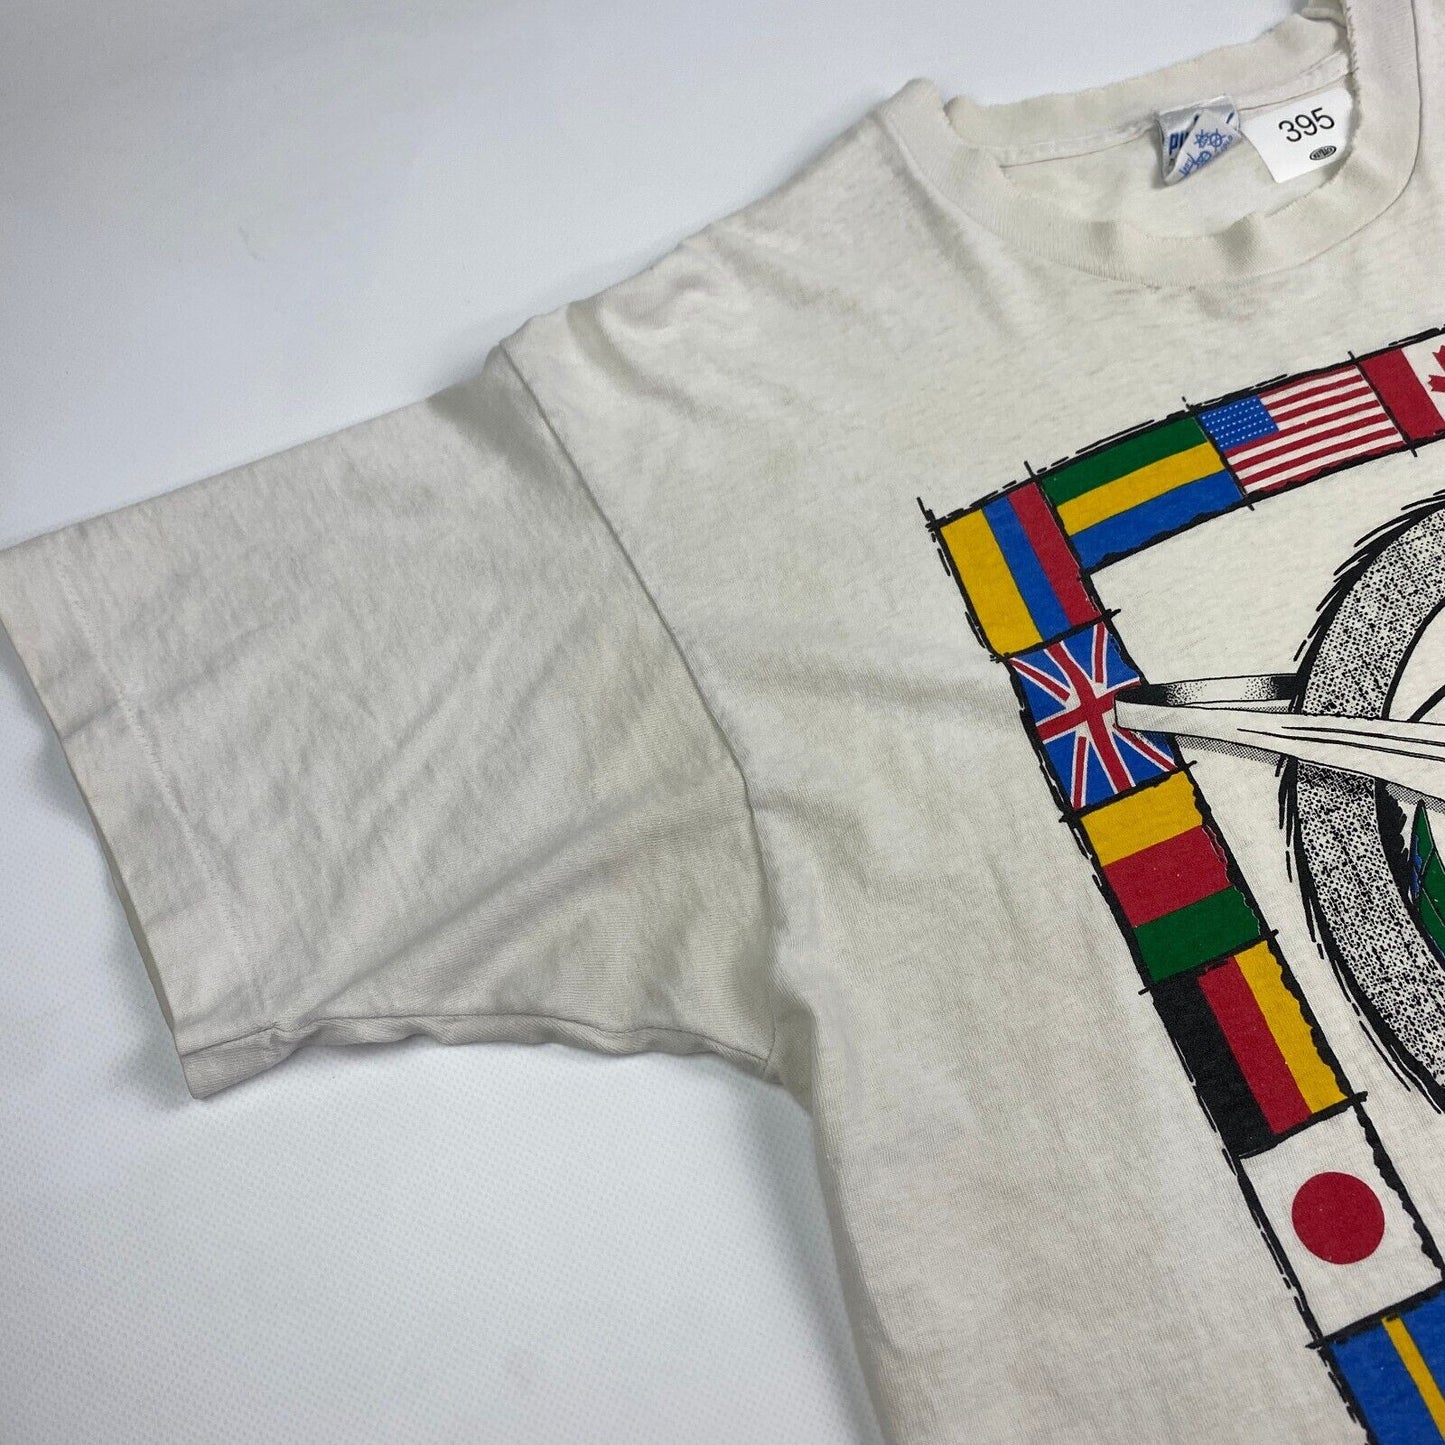 VINTAGE 1994 PUMA World Cup Soccer Graphic White T-Shirt sz XL Men